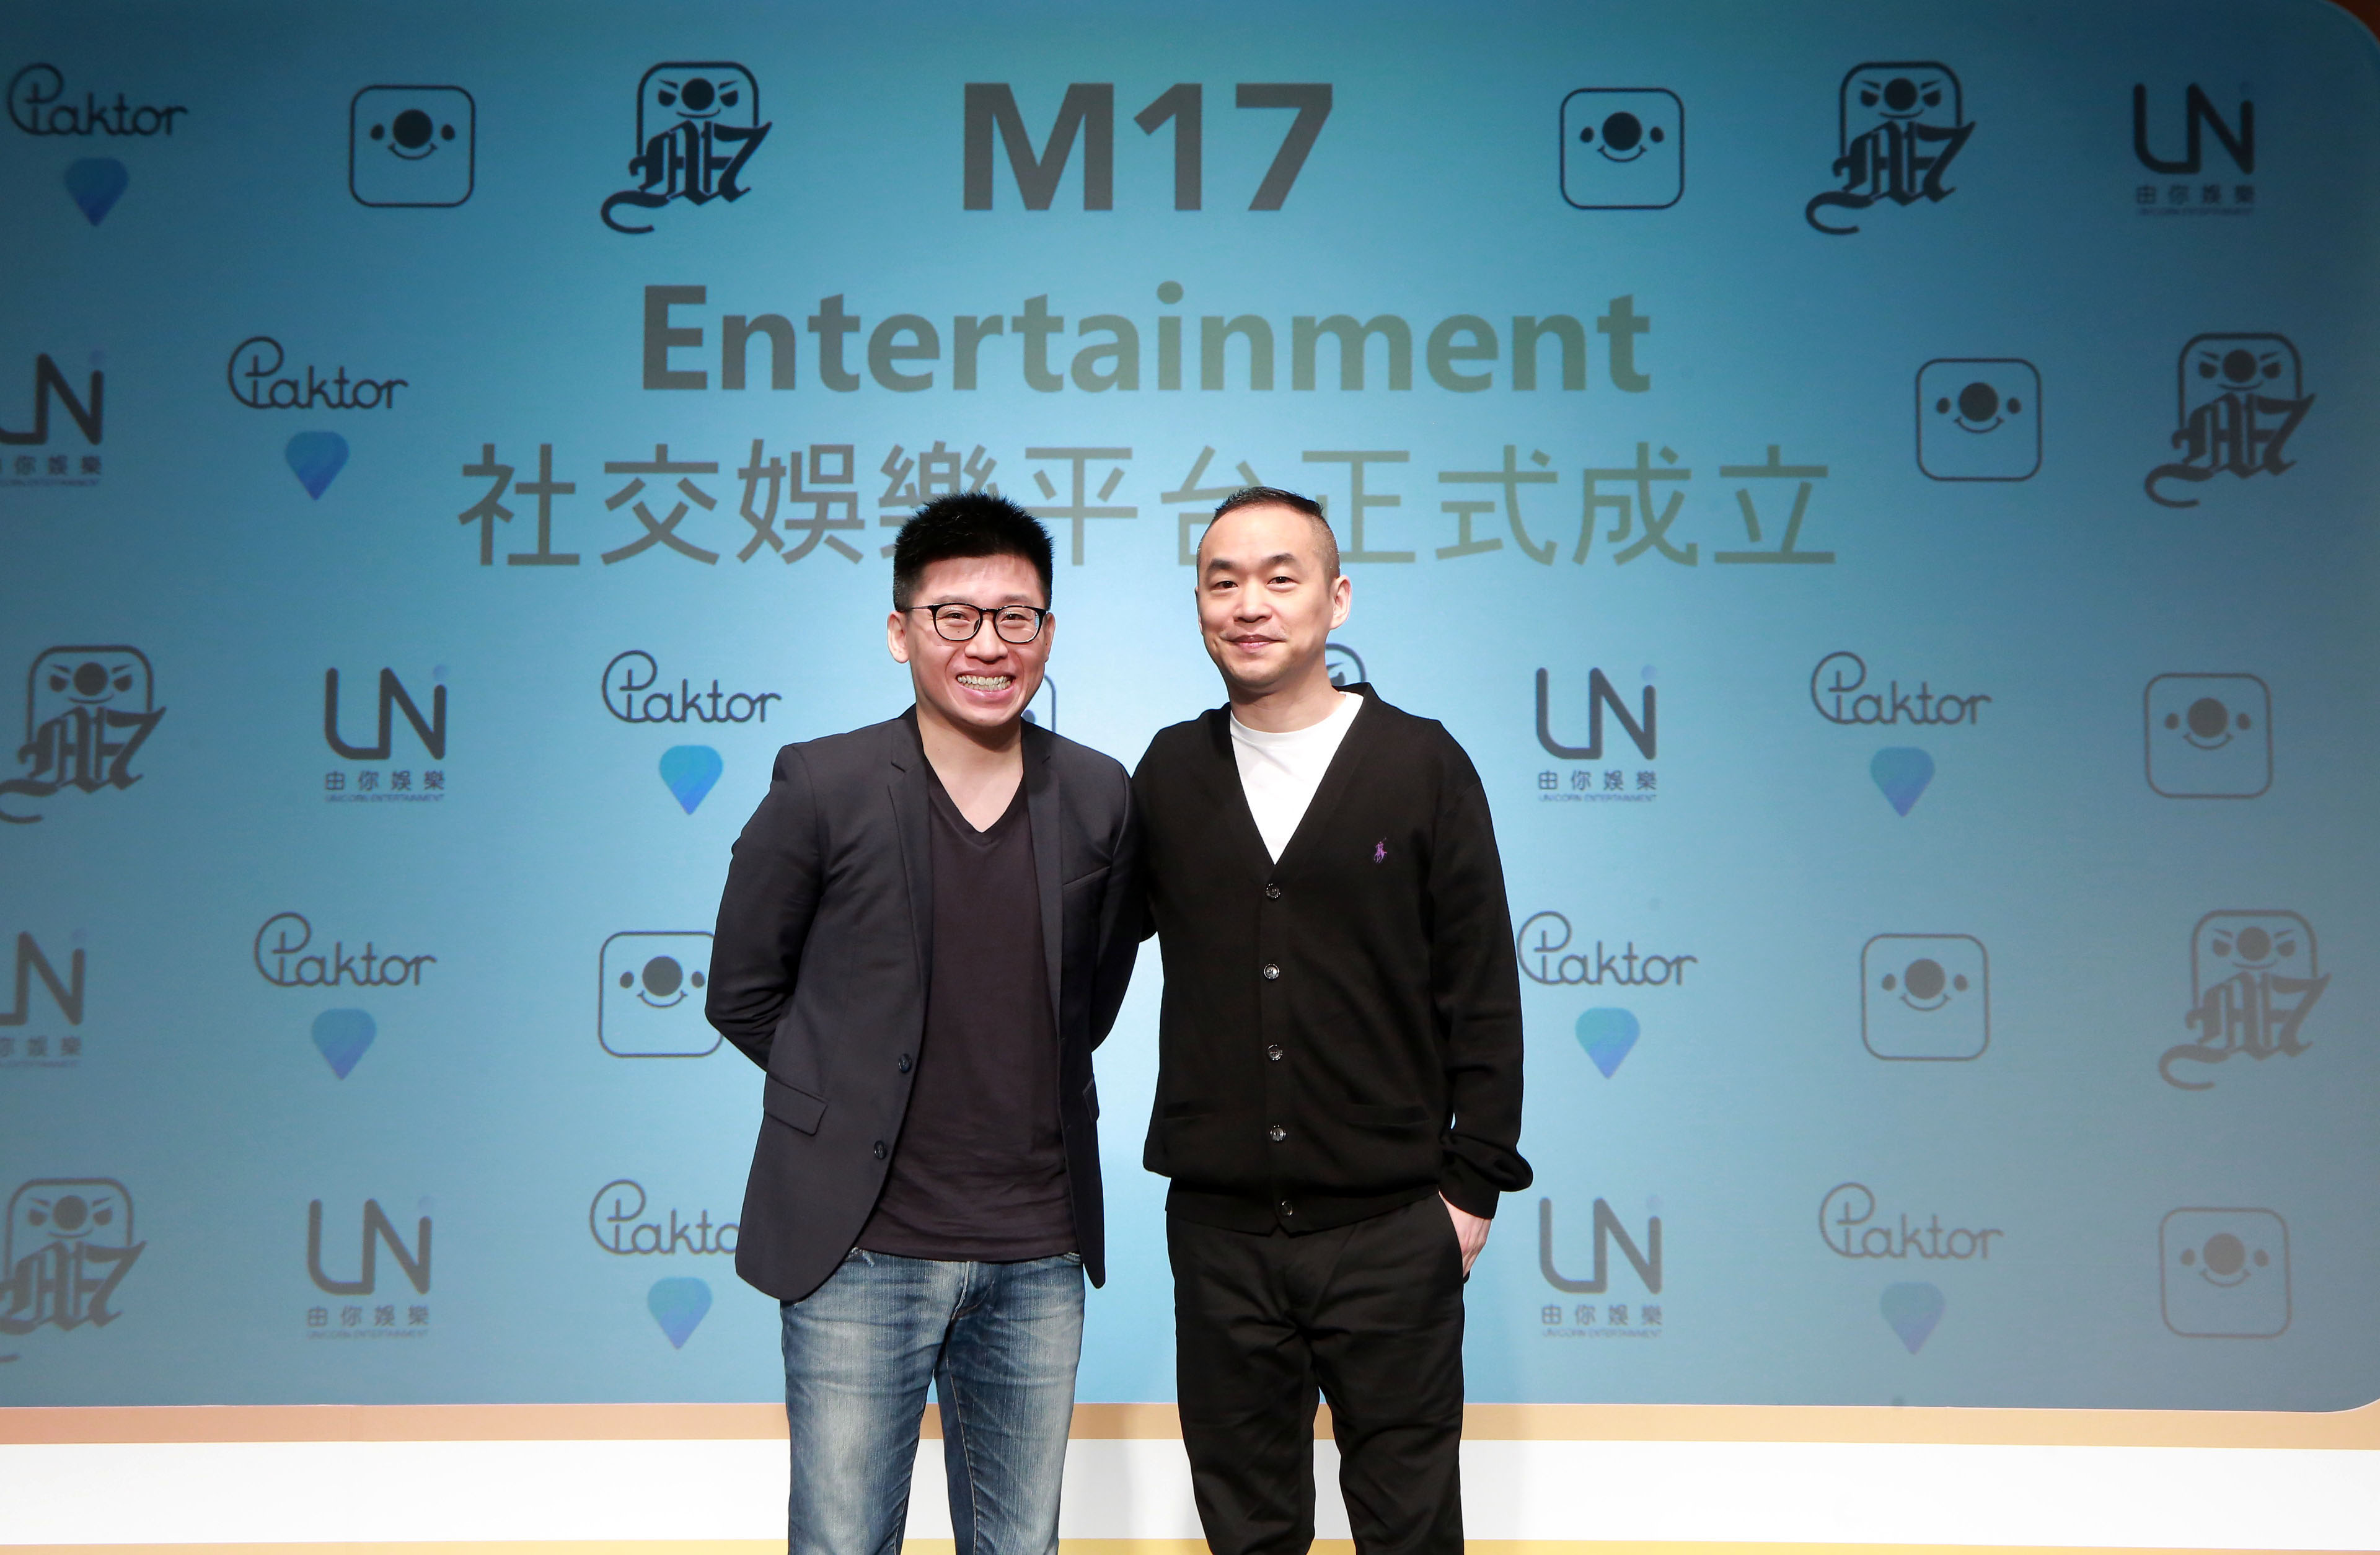 M17 Entertainment正式成立，旗下將包含《17直播》、《Paktor》、《由你娛樂》、Machi 17電競隊等娛樂品牌，大哥黃立成娛樂事業版圖全面擴張。.JPG